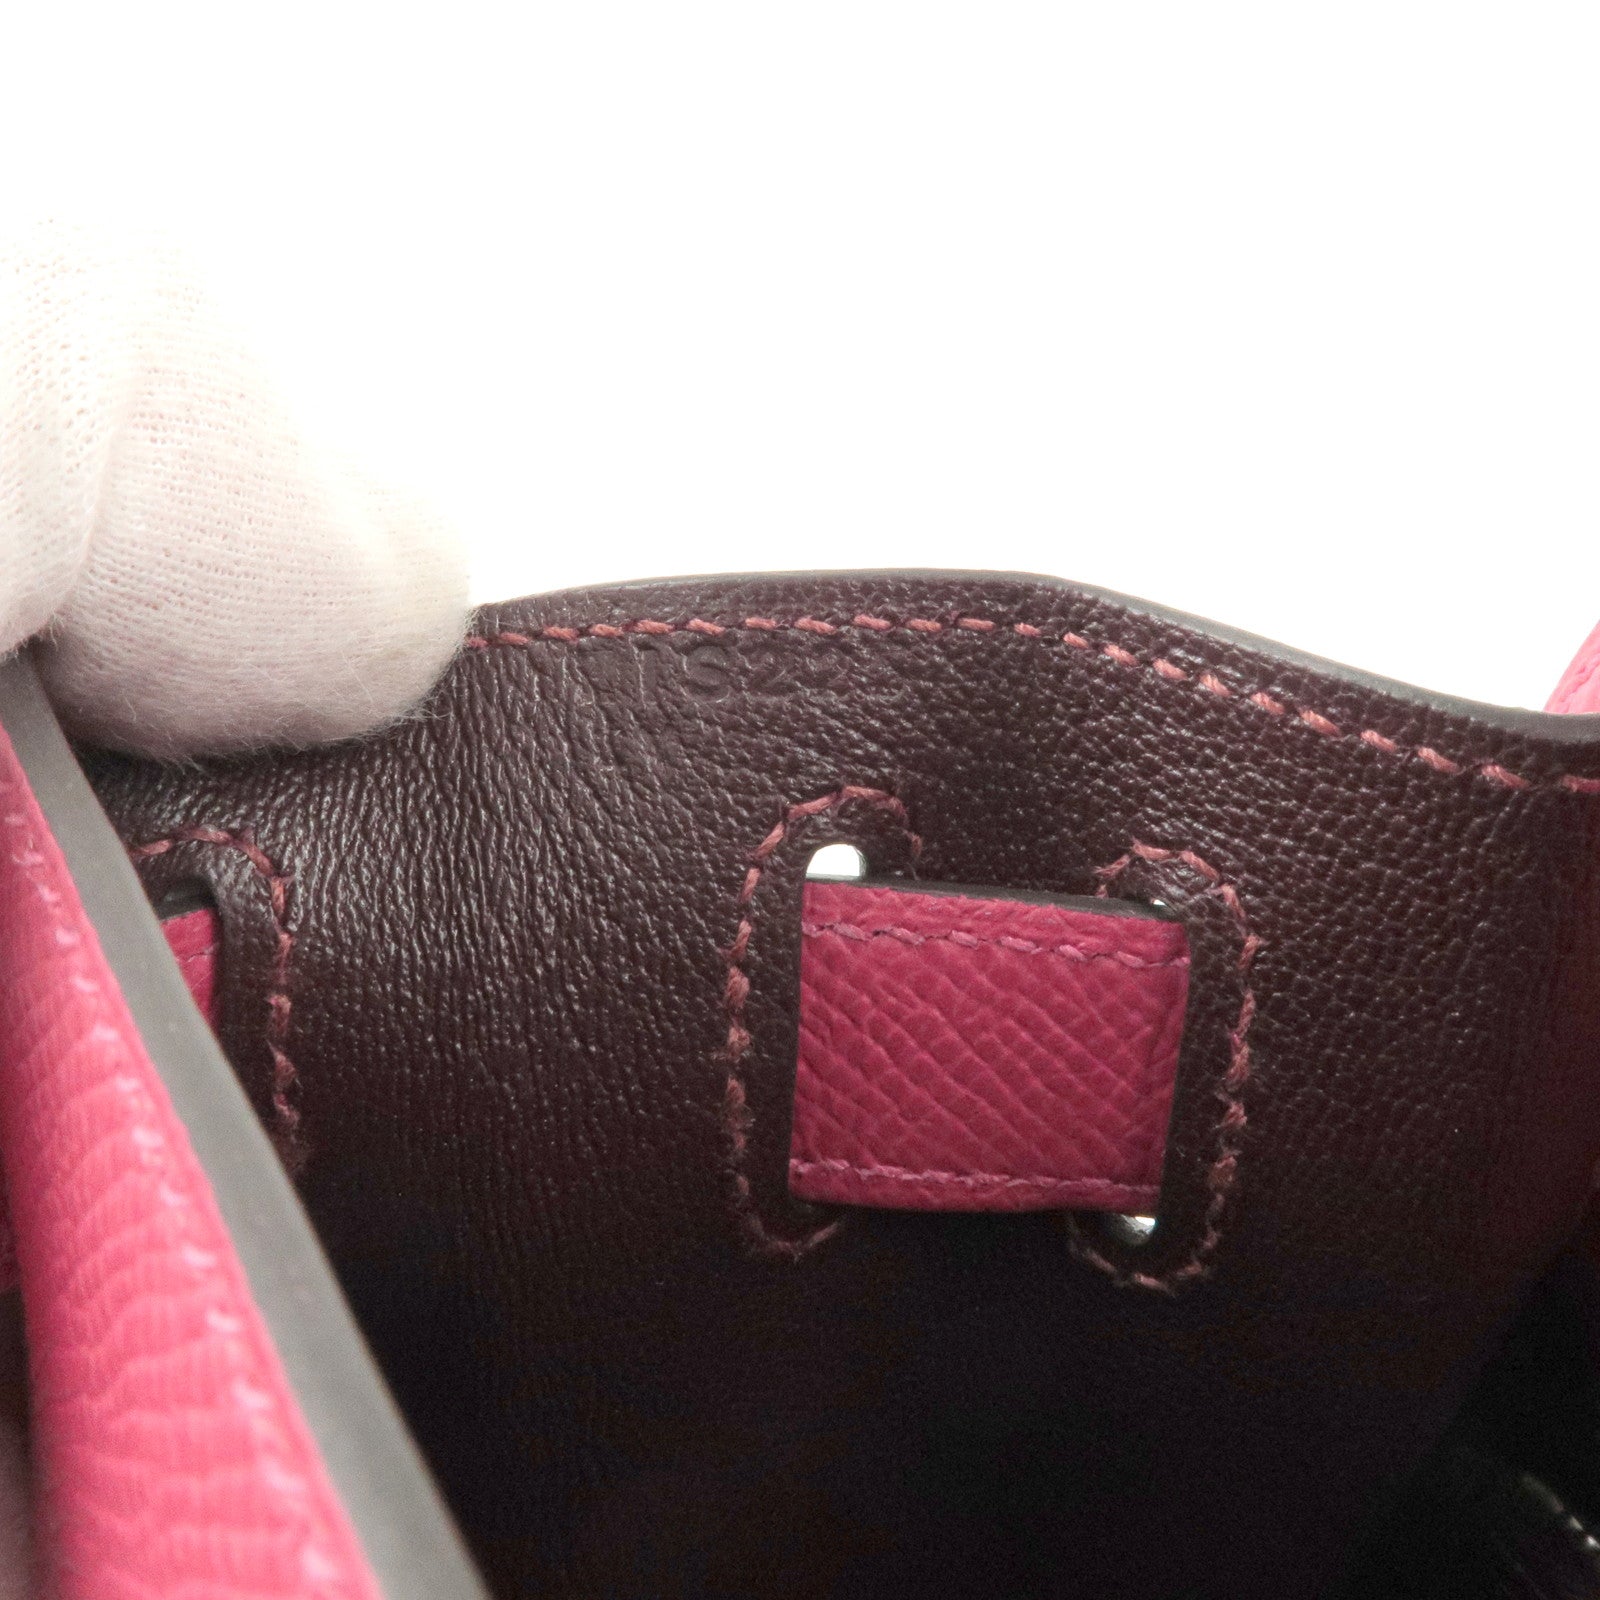 HERMES KELLY 28 SELLIER 2way Handbag 0X◯X Purse Rouge Vif Courchevel 21249